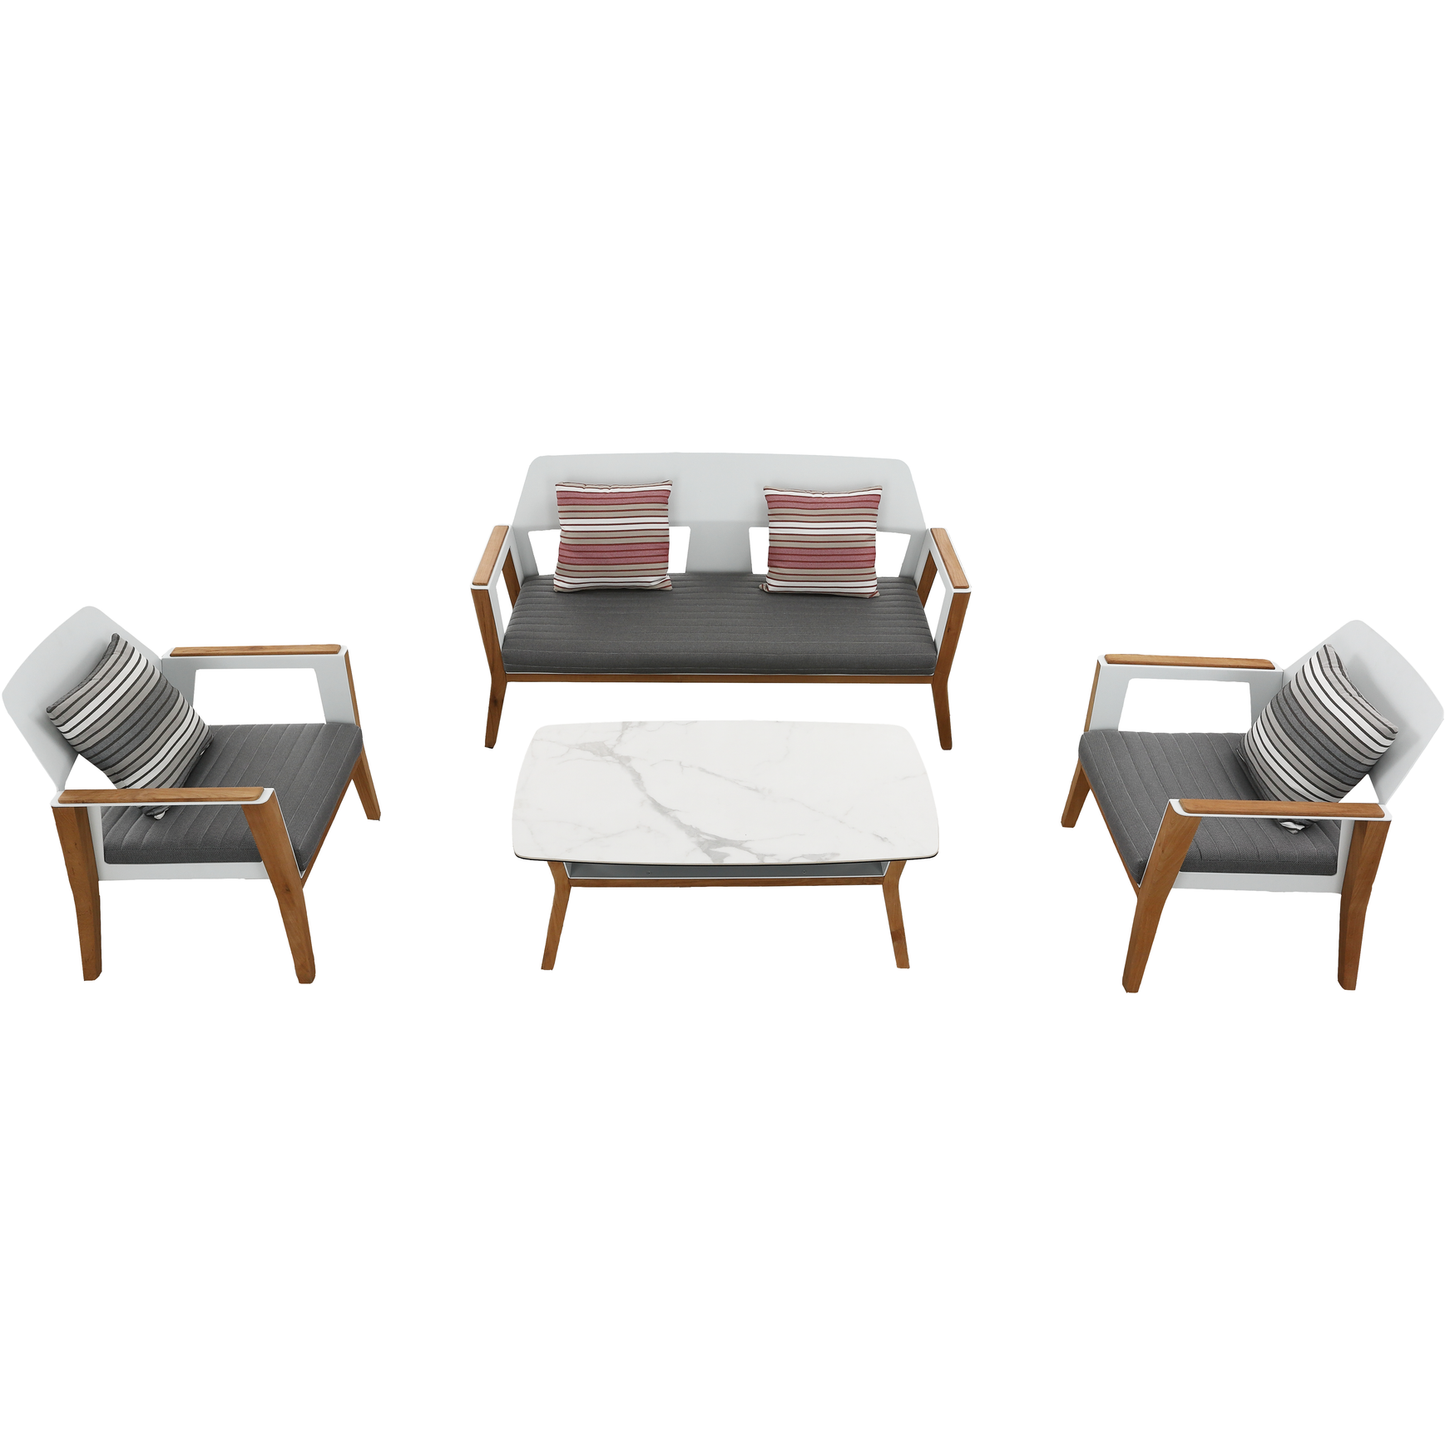 Sheldon 2 Seat Sofa & Coffee Table Set - PadioLiving - Sheldon 2 Seat Sofa & Coffee Table Set - Outdoor Sofa and Coffee Table Set - PadioLiving